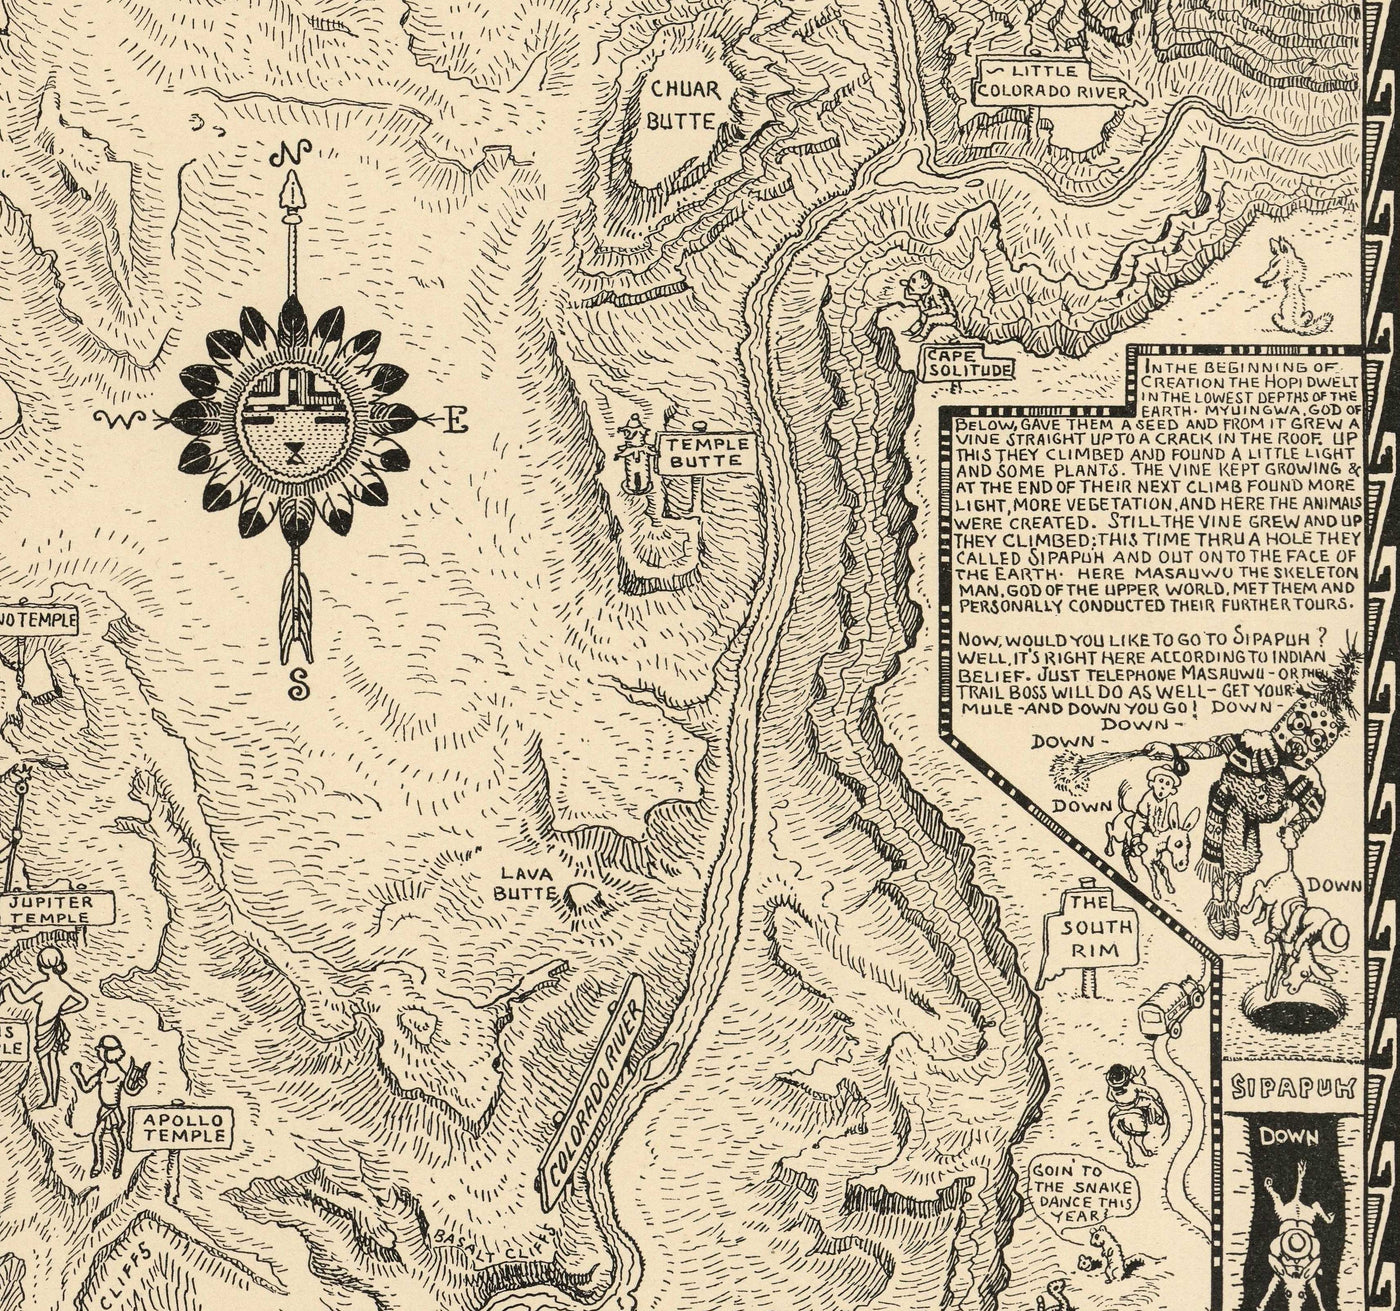 Alte illustrative Karte des Grand Canyon im Jahr 1931 von Jo Mora - Arizona, Colorado River, Horseshoe Bend, Ureinwohner